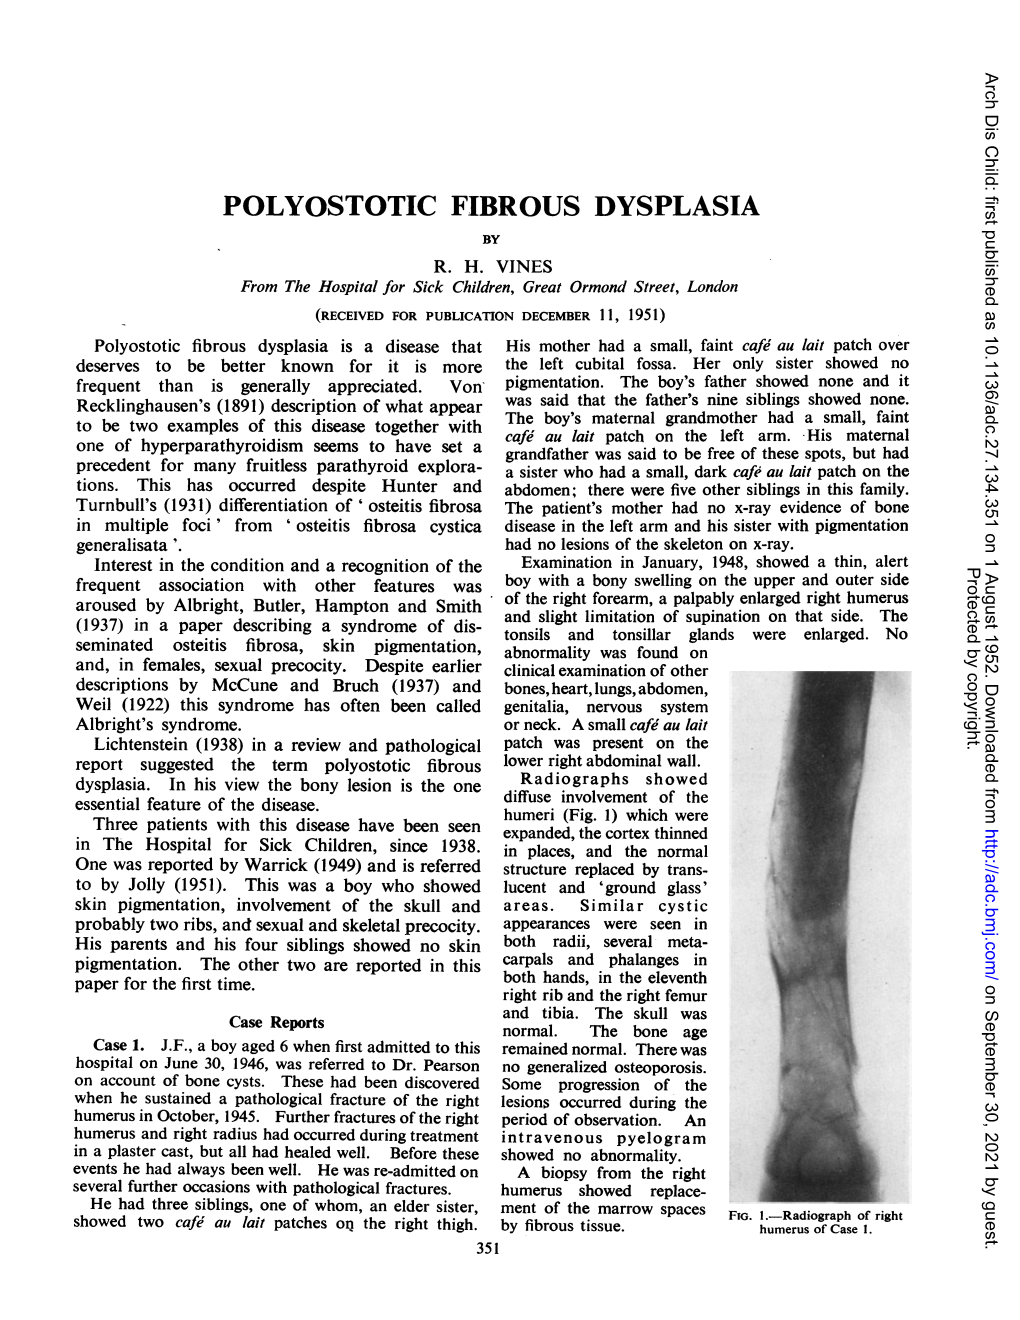 Polyostotic Fibrous Dysplasia by R